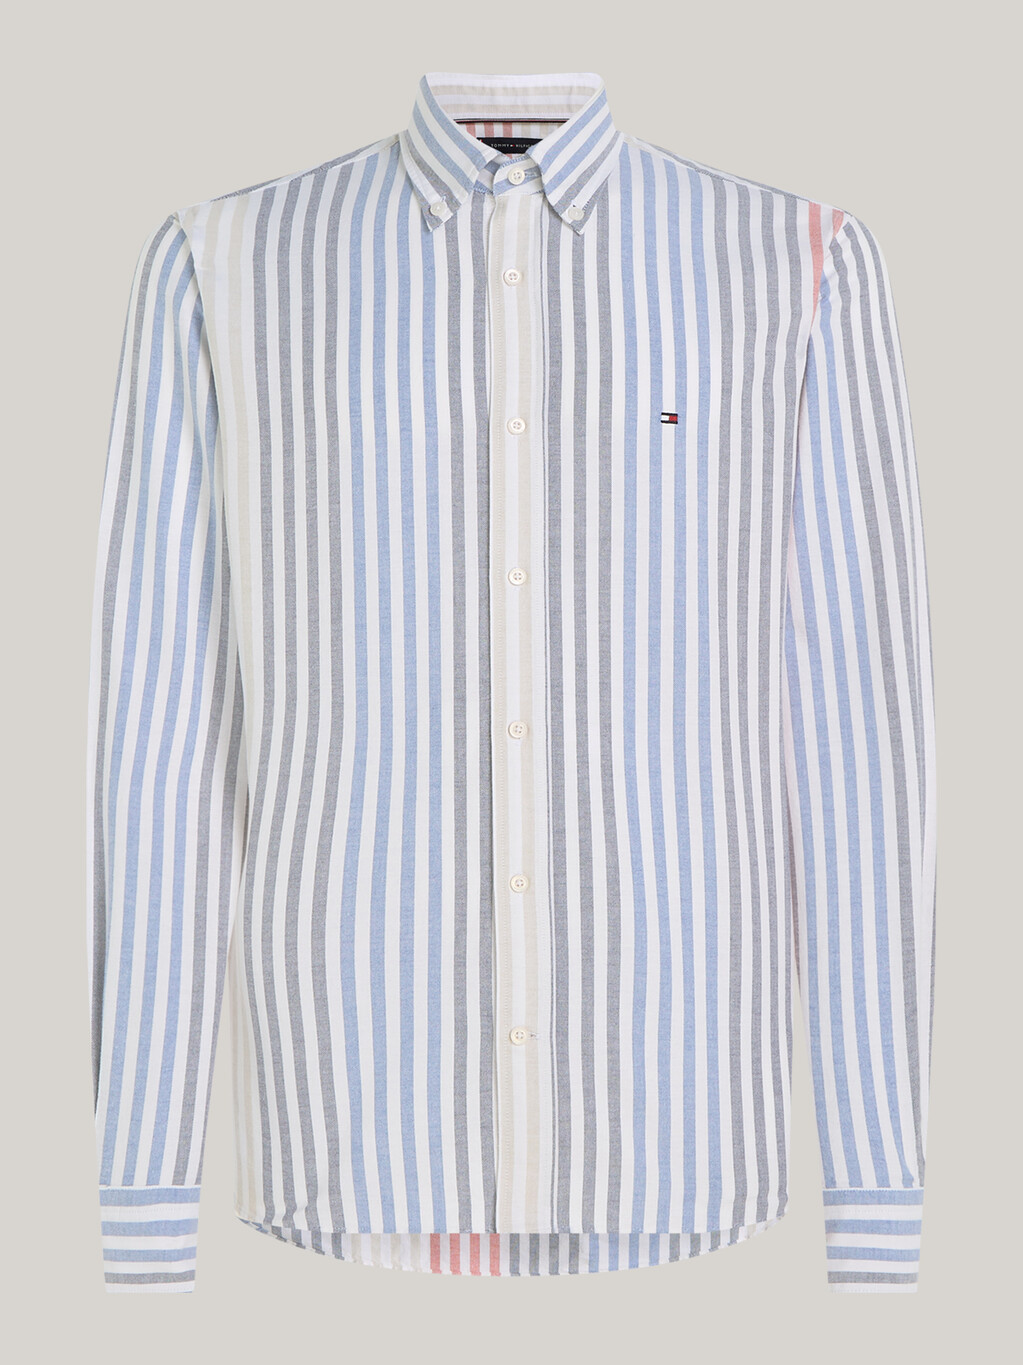 Global Stripe Ithaca Regular Oxford Shirt, Carbon Navy / Primary Red / Multi, hi-res